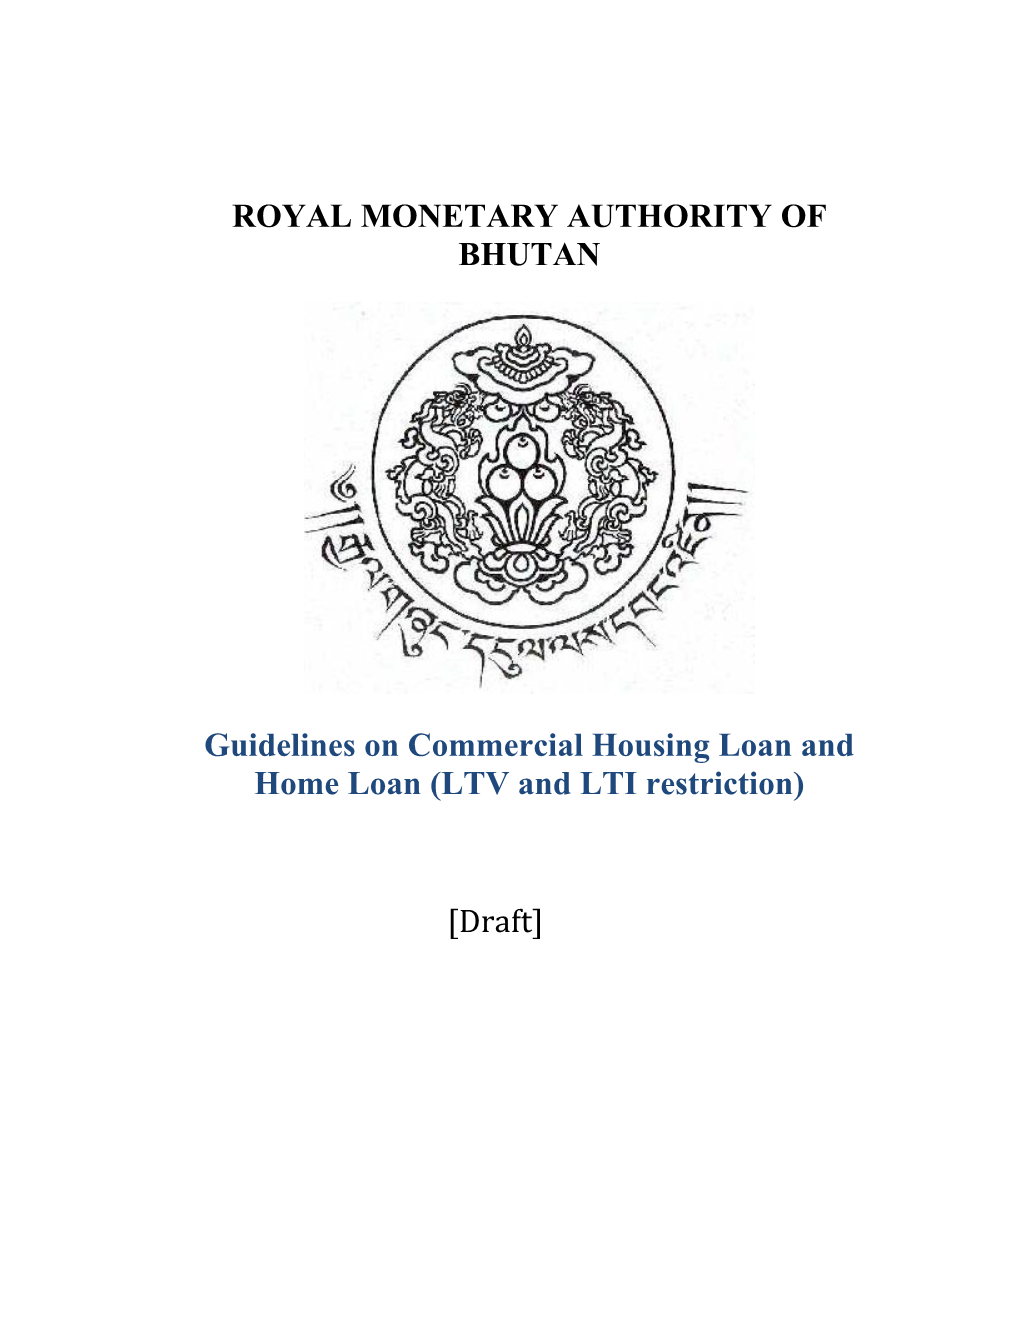 Royal Monetary Authority of Bhutan